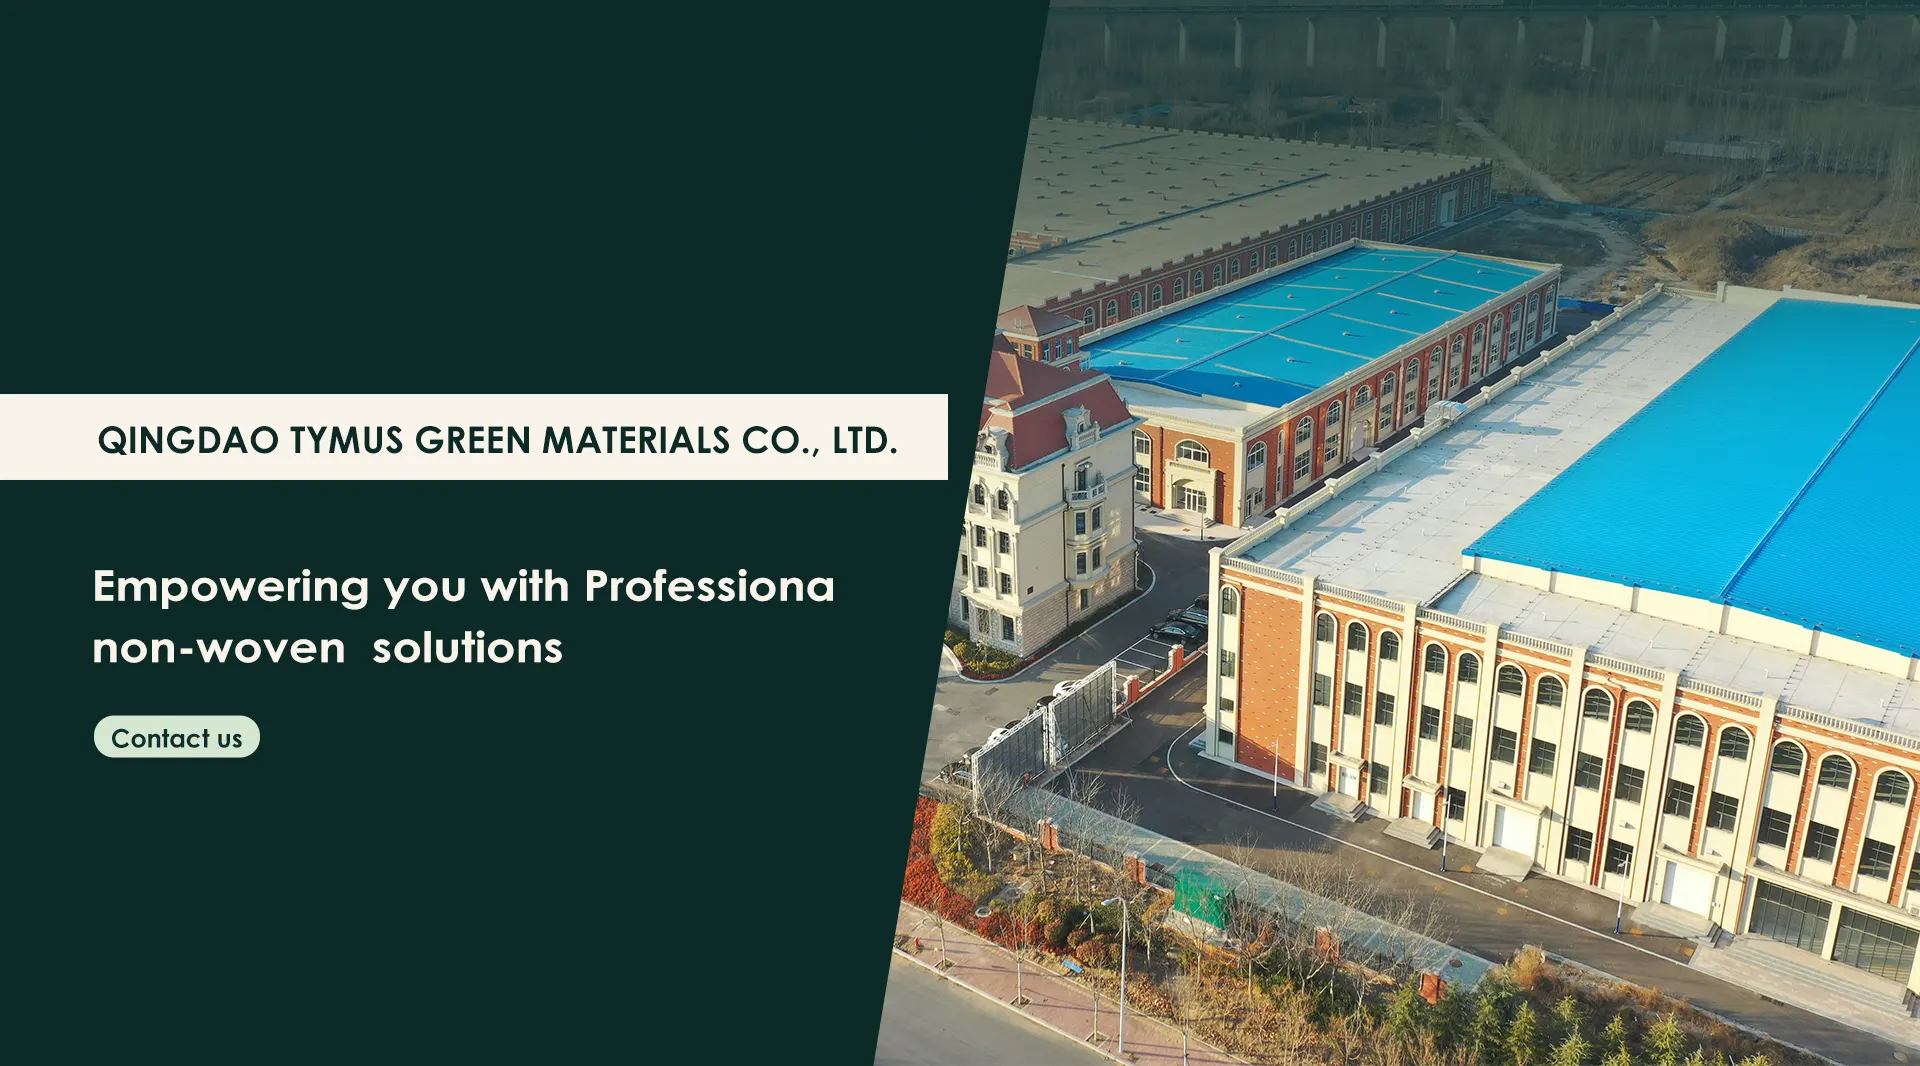 Qingdao Tymus Green Materials Co., Ltd